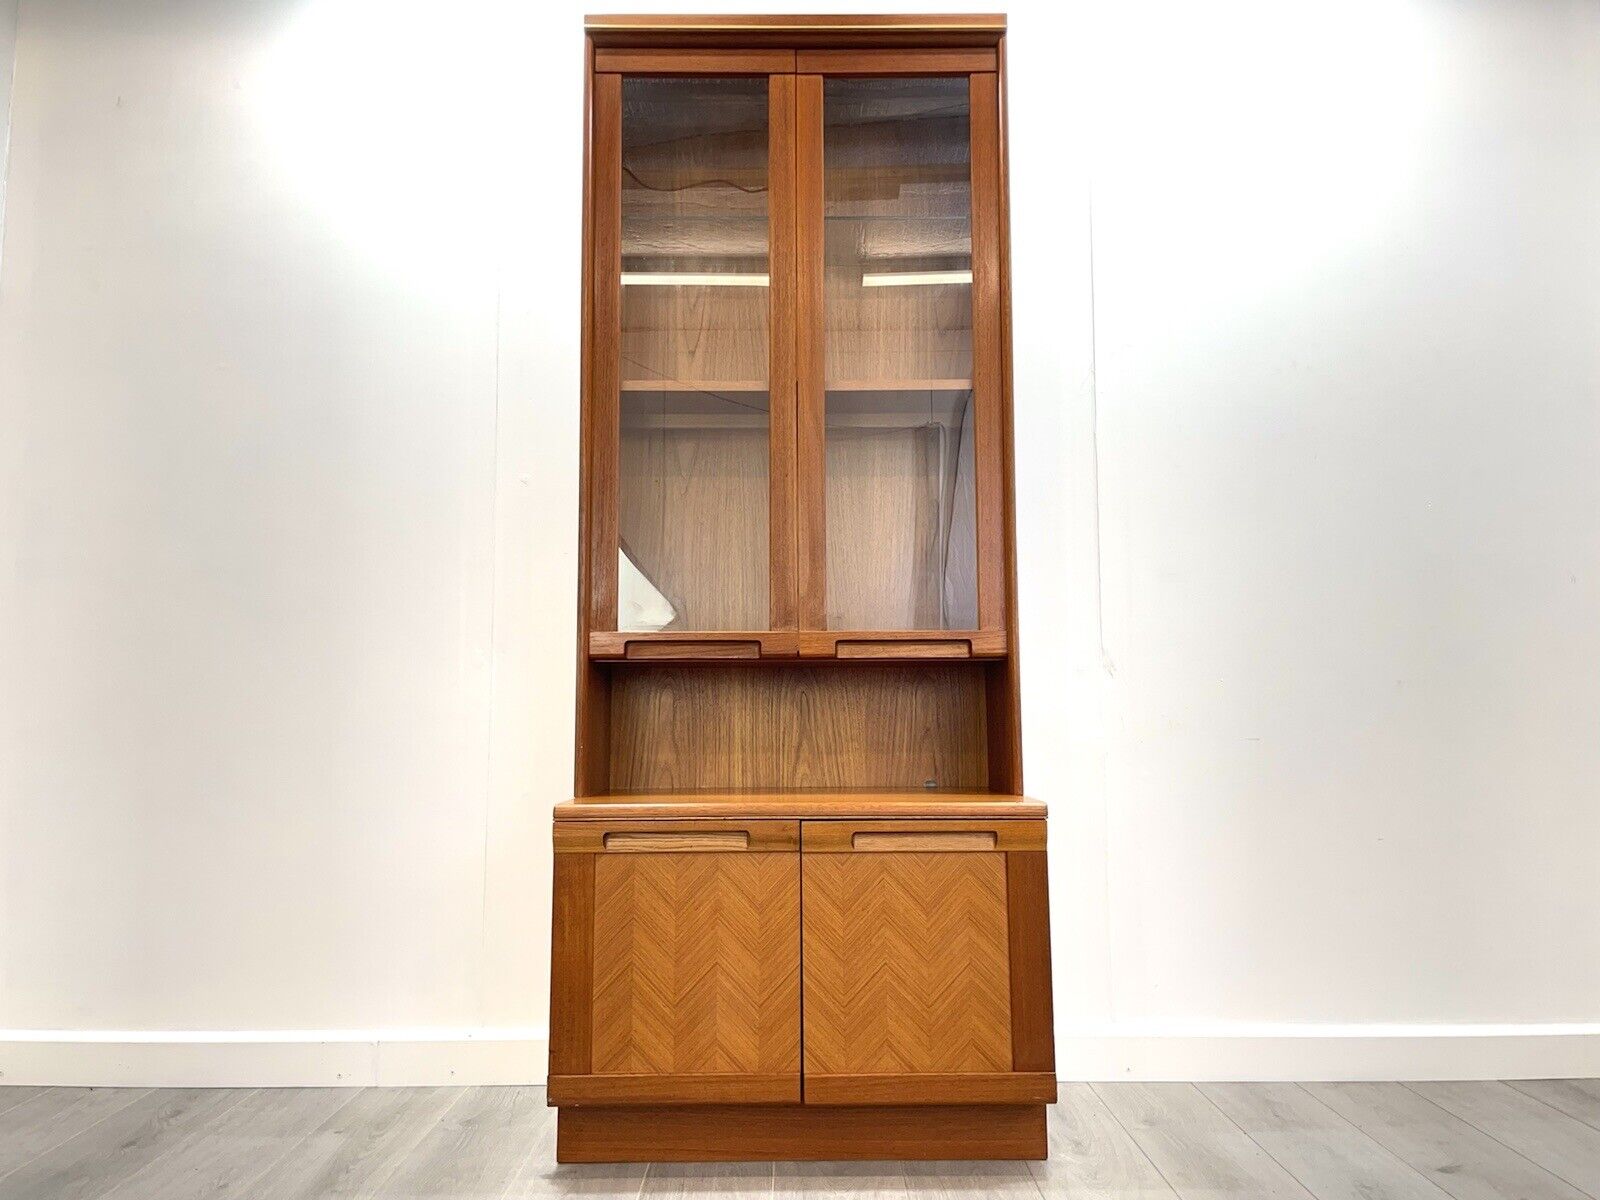 A Rare G Plan Herringbone, Teak and Glass Illuminated Bookcase / Display Cabinet